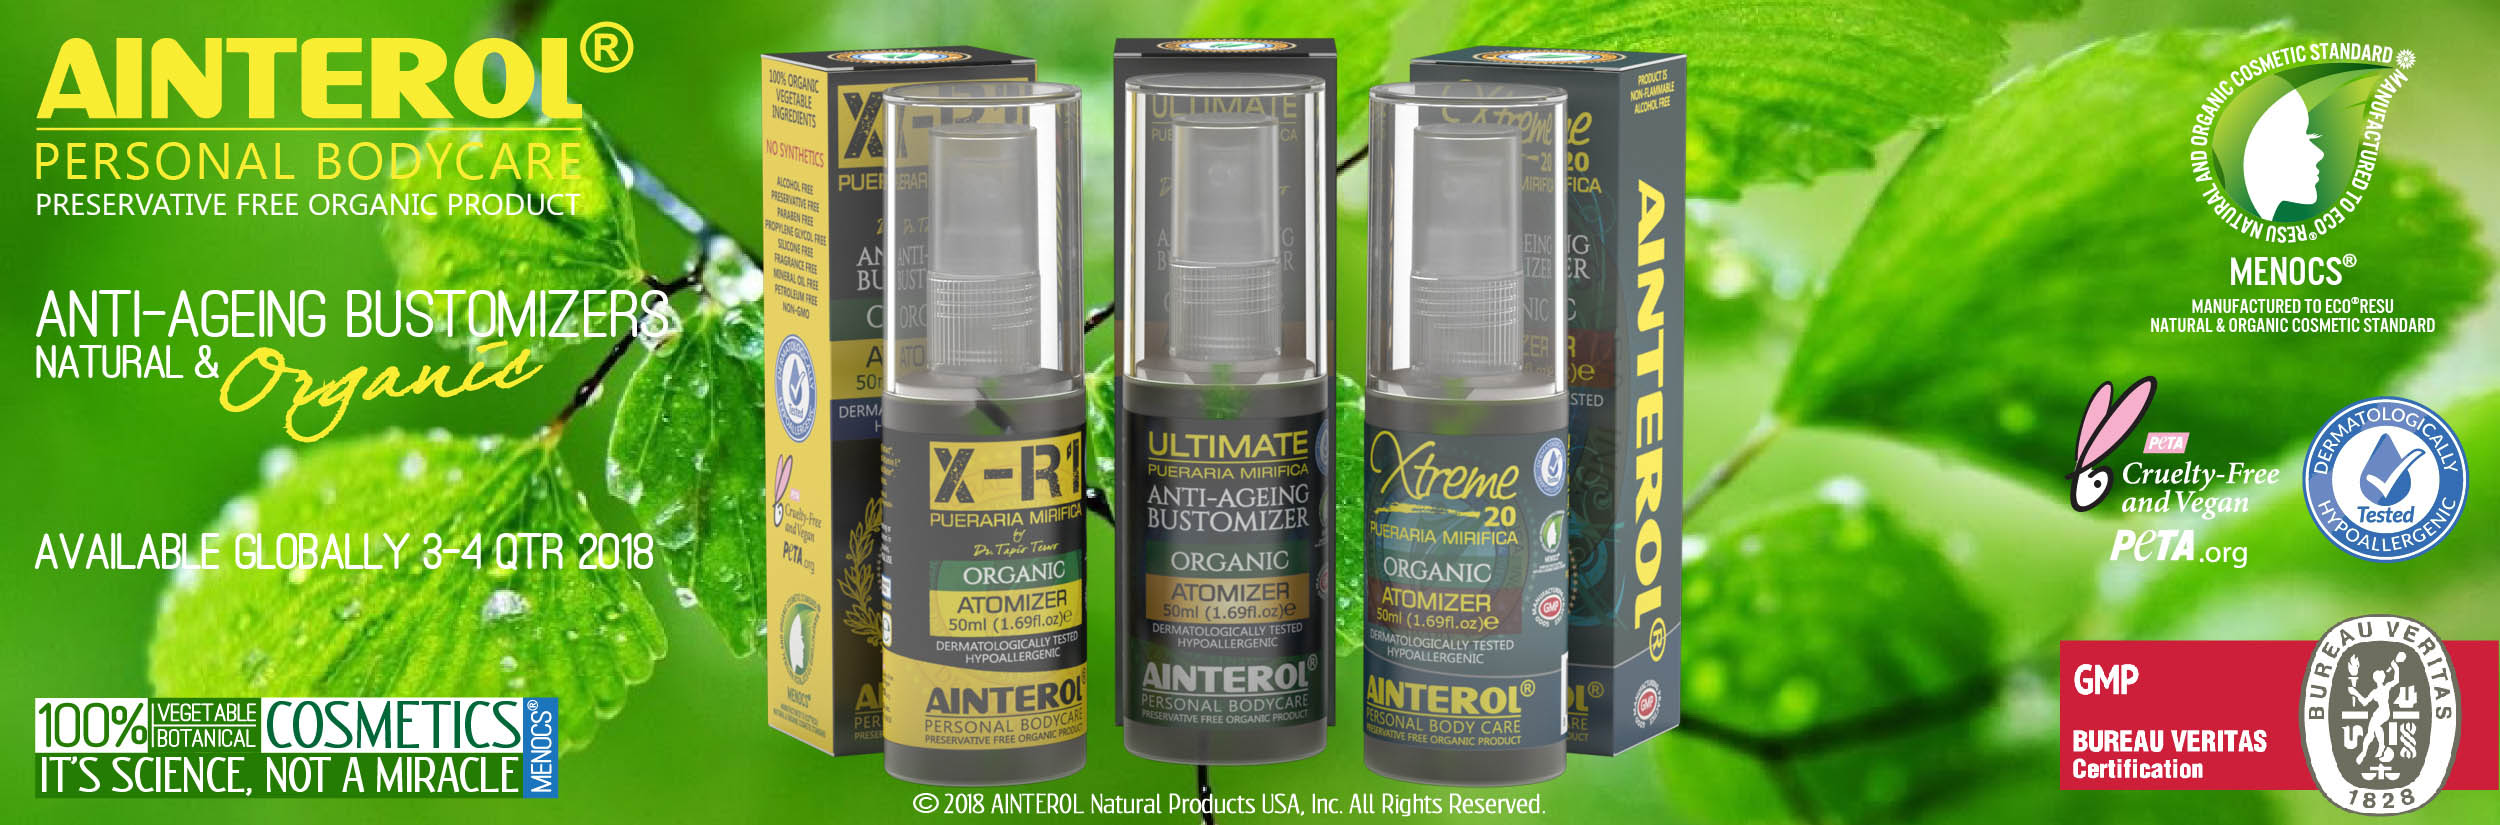 AINTEROL® Organic Atomizers